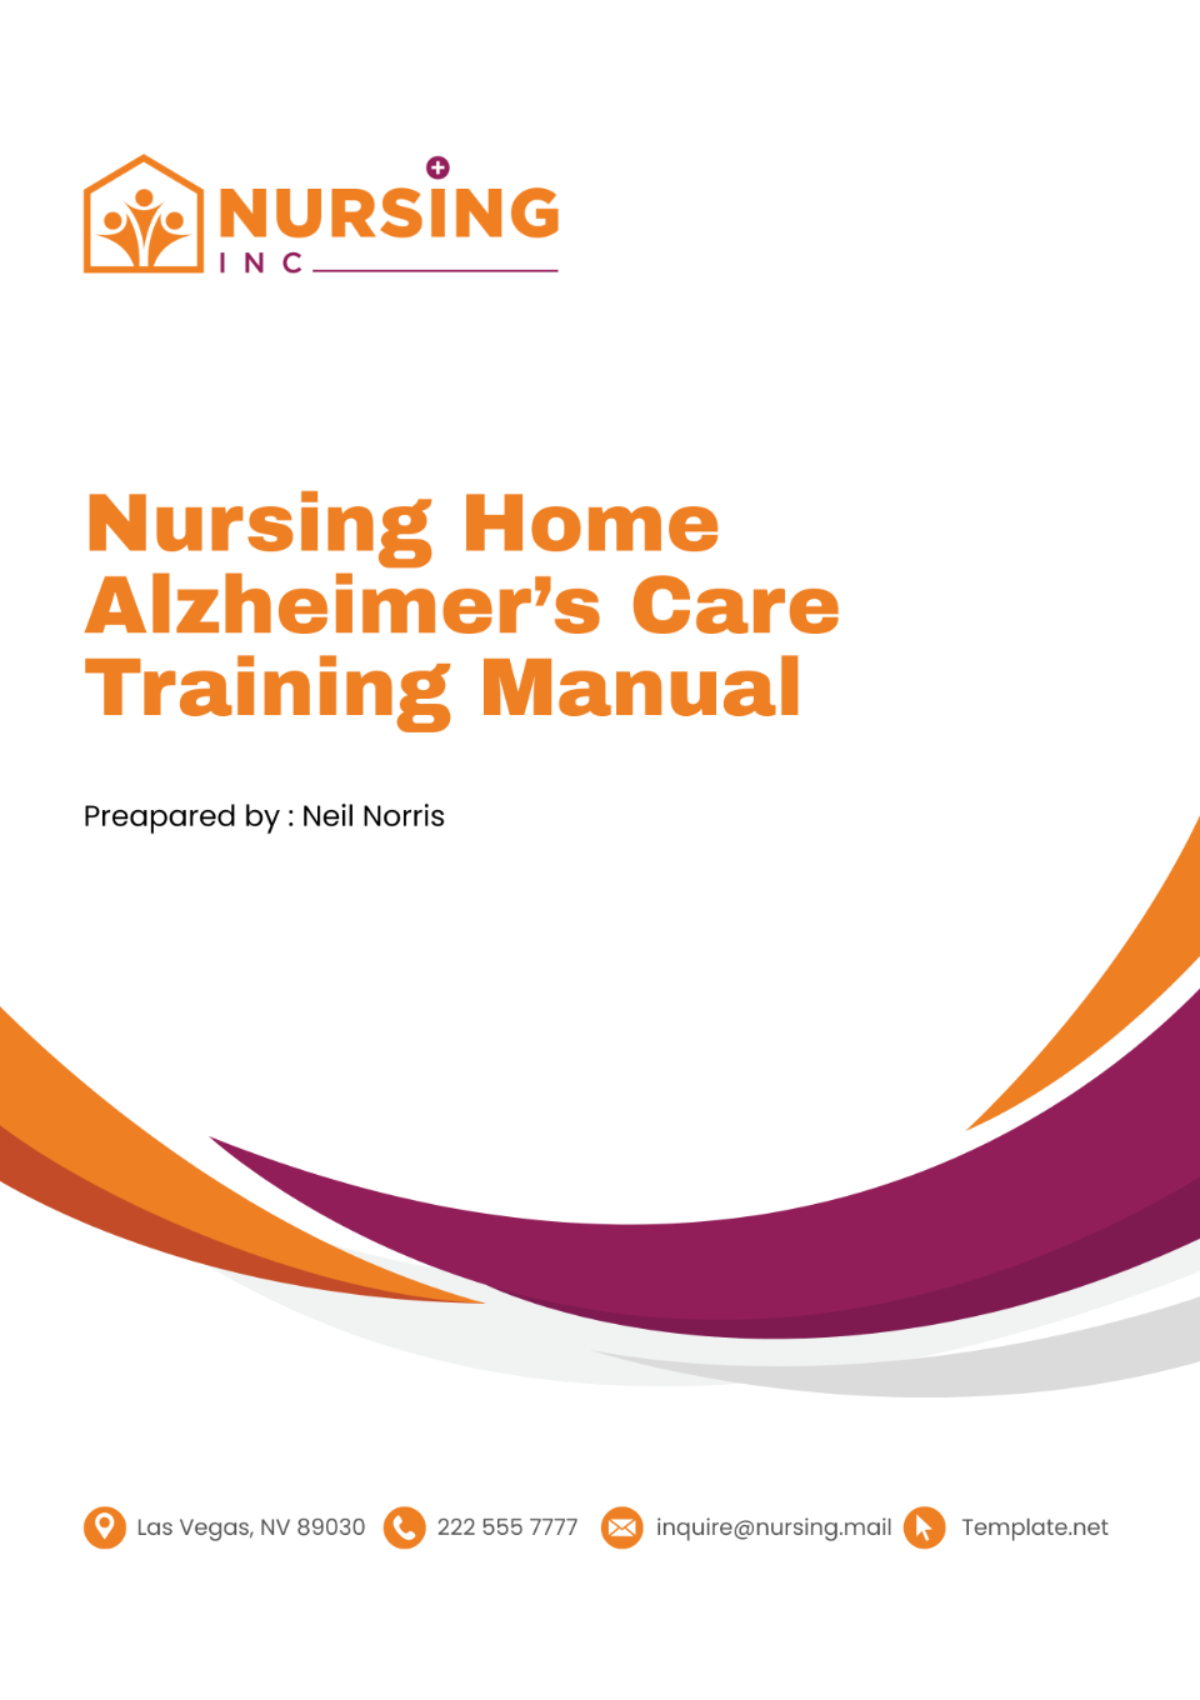 Nursing Home Alzheimer’s Care Training Manual Template